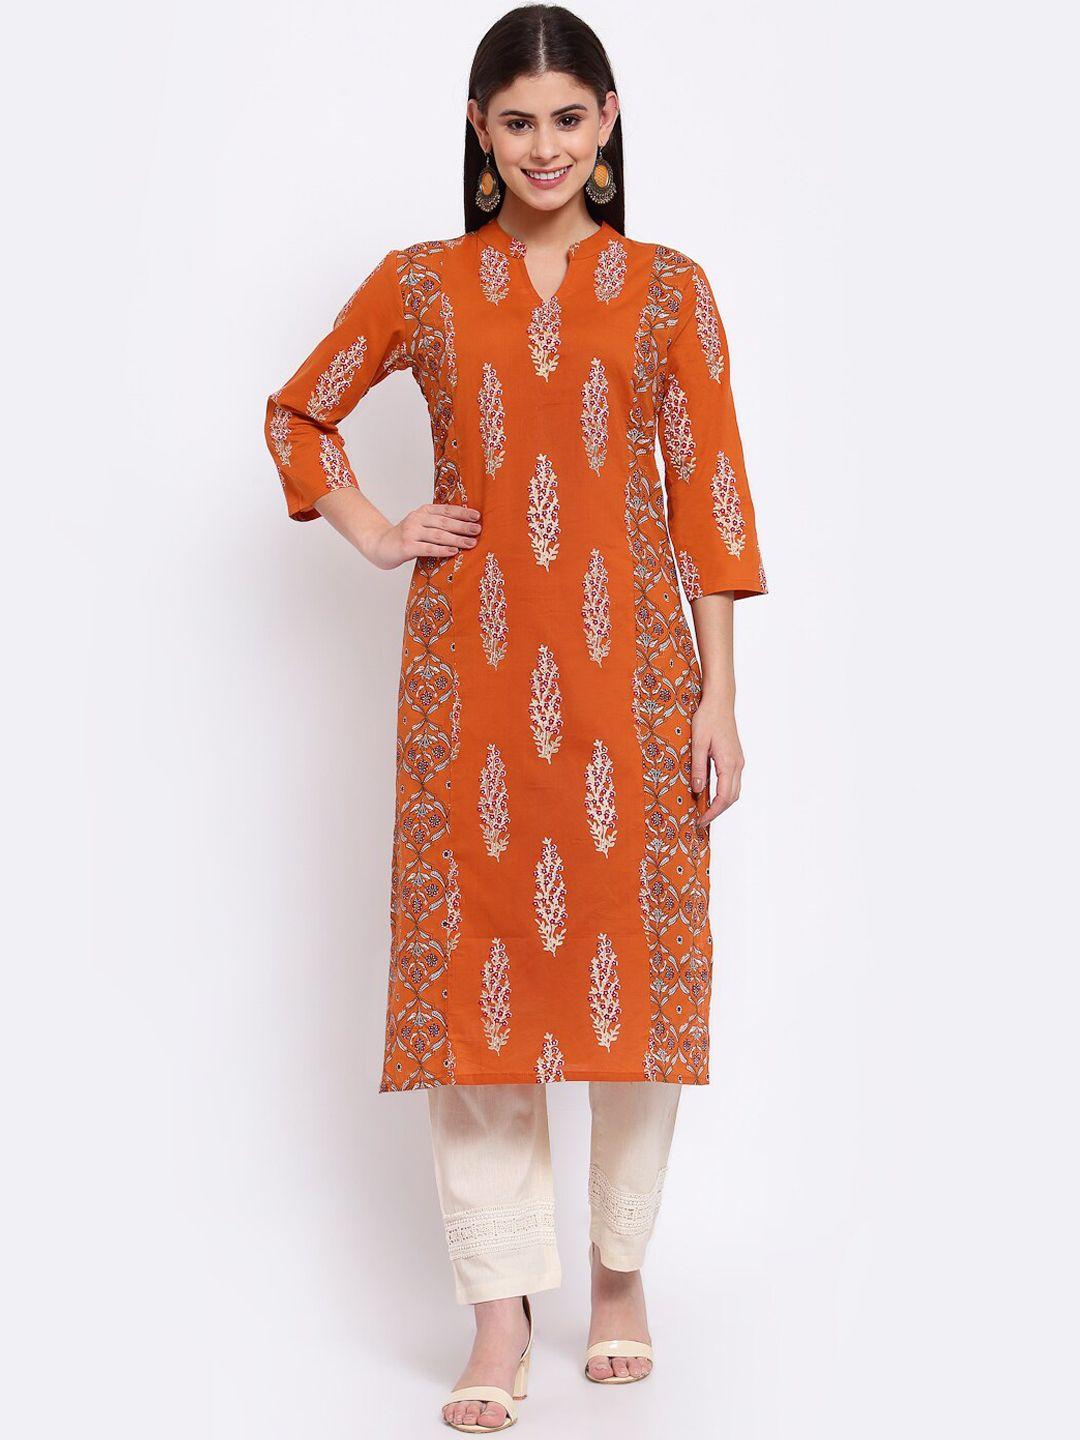 svarchi women orange floral printed cotton straight kurta